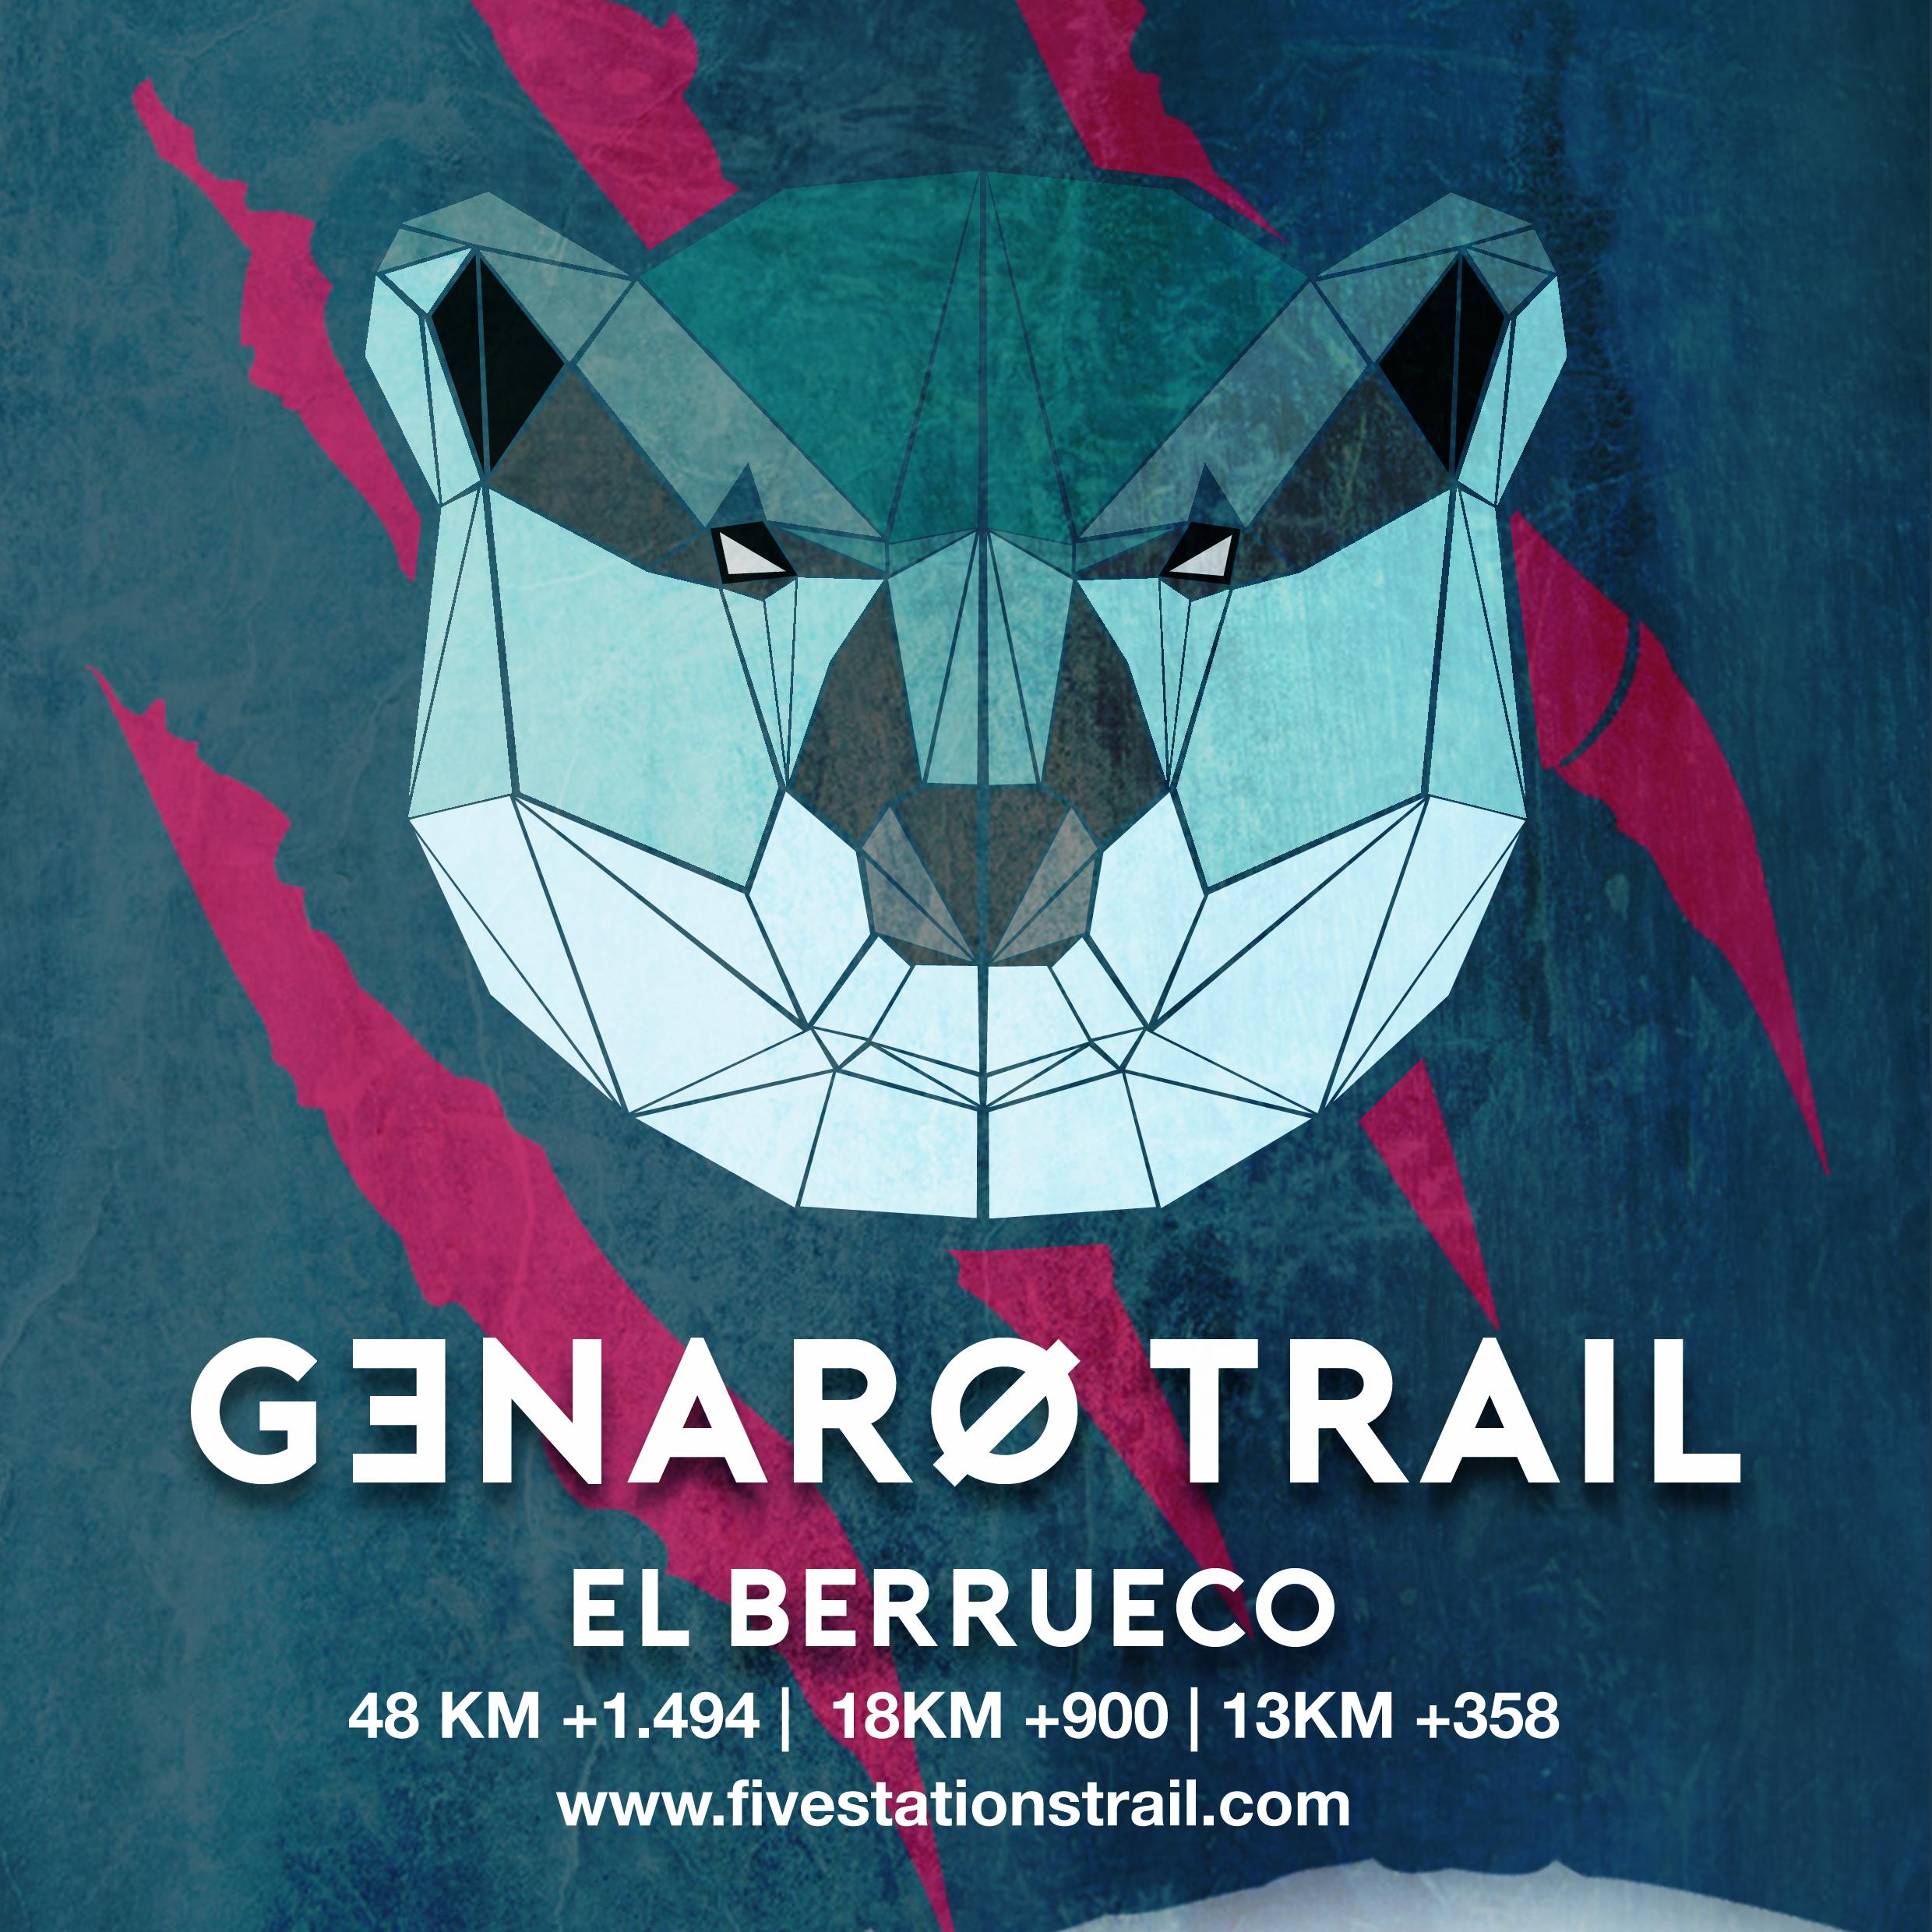 genaro trail 2019